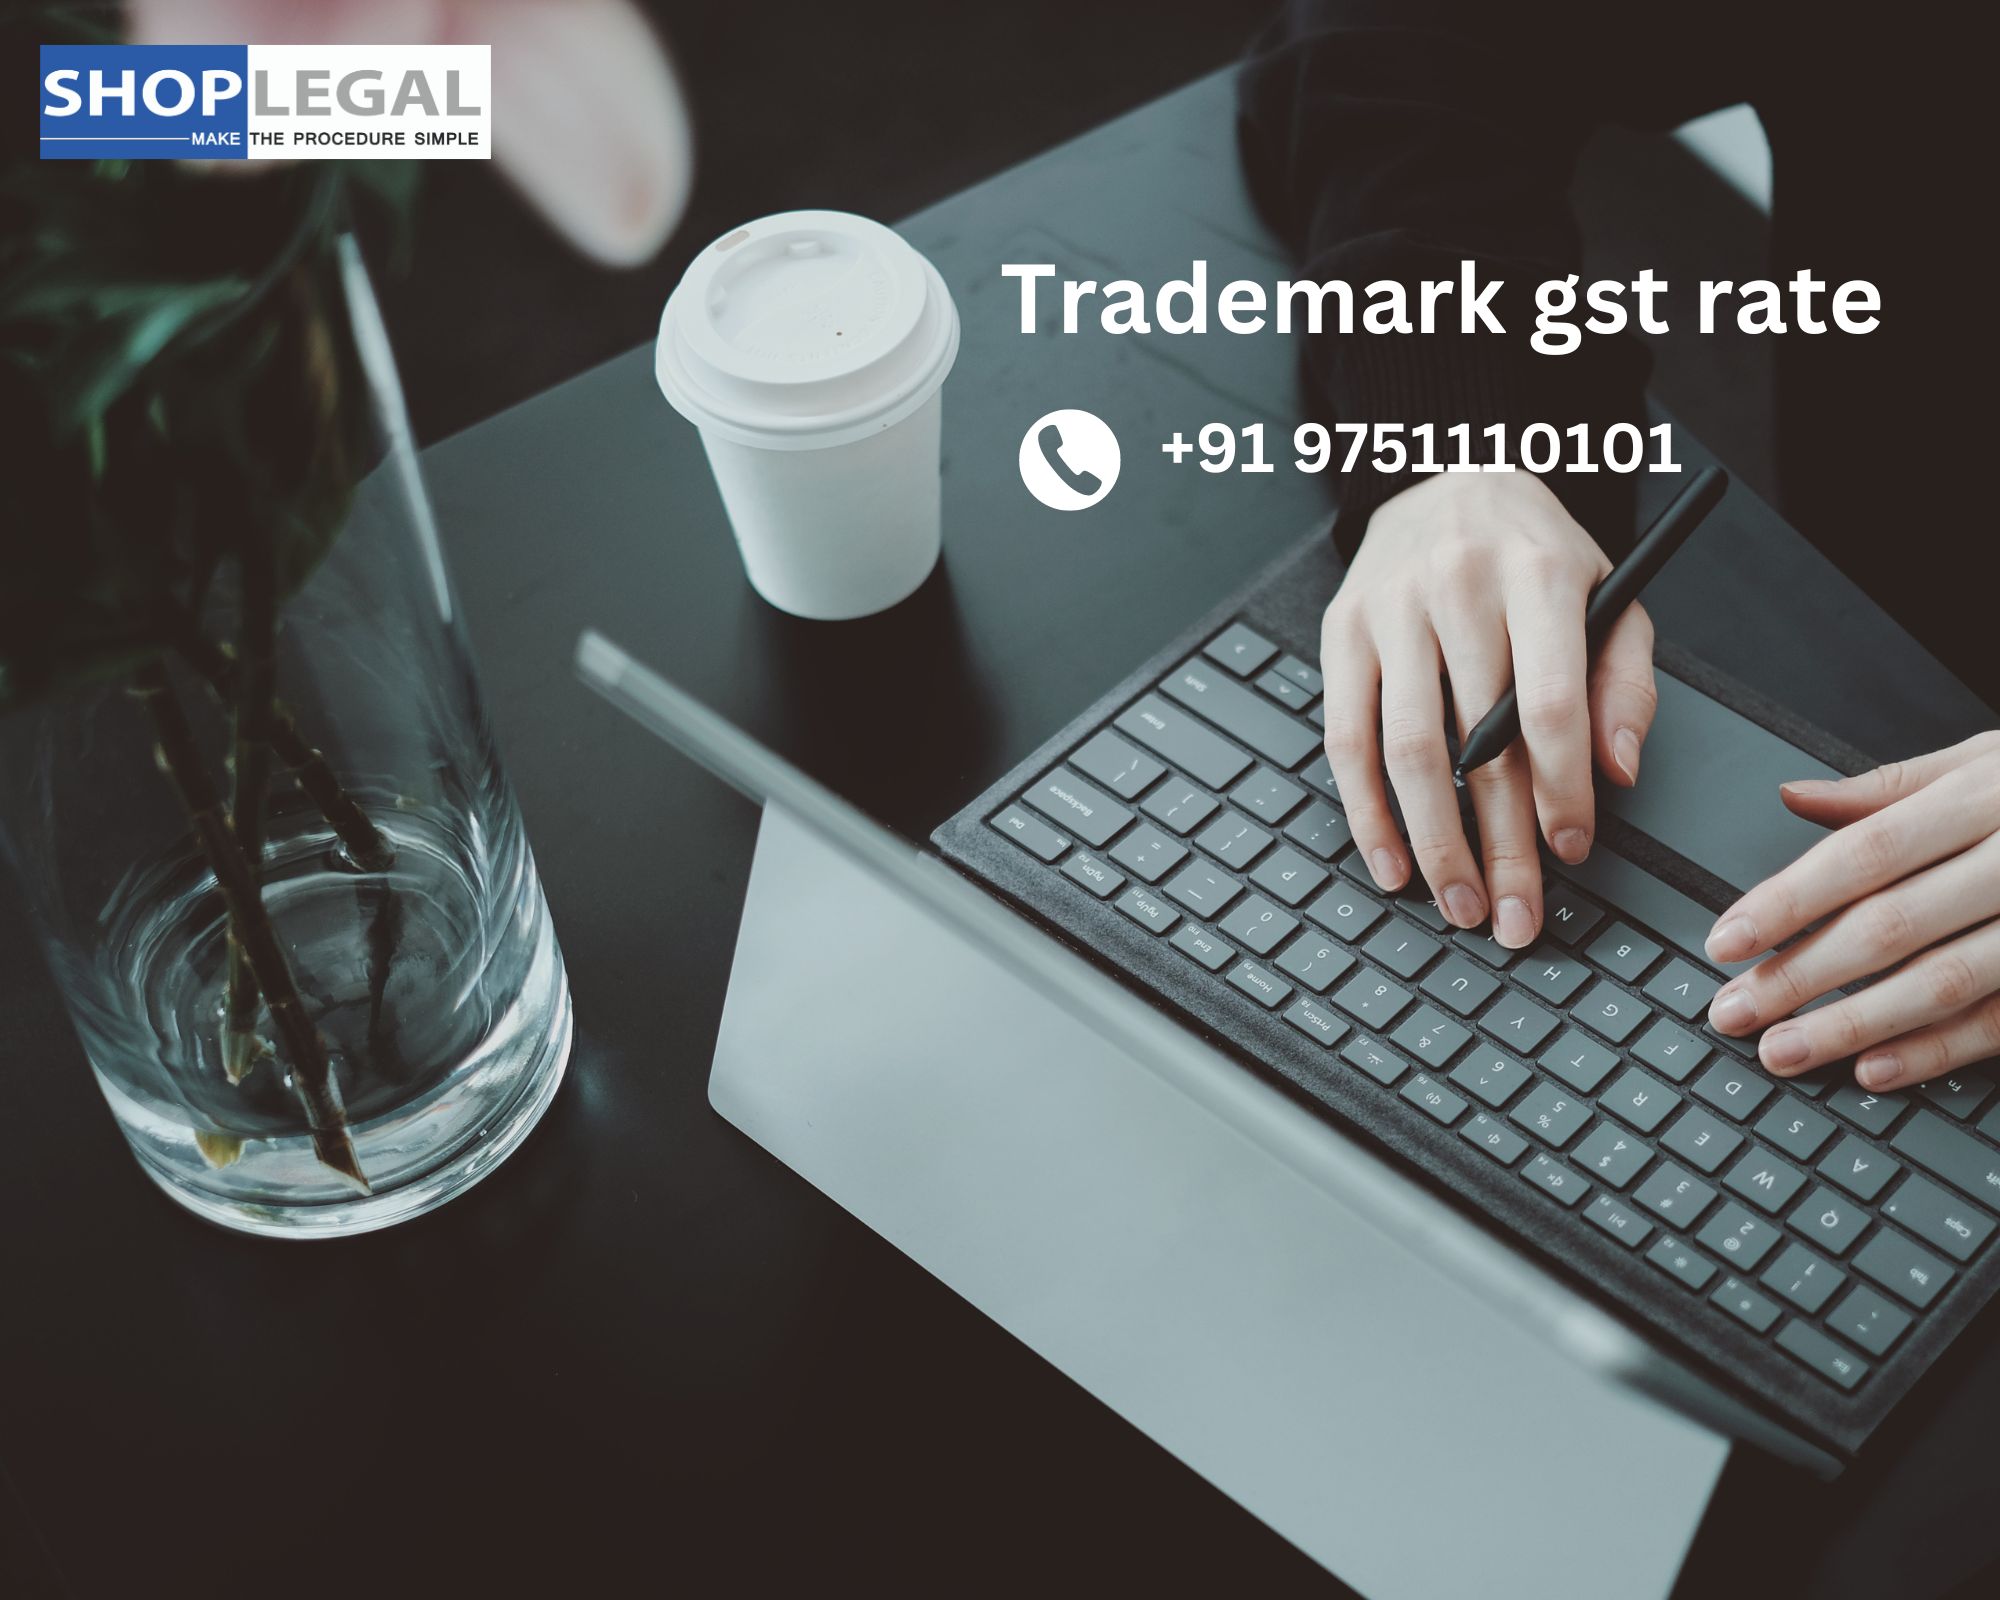 Trademark gst rate